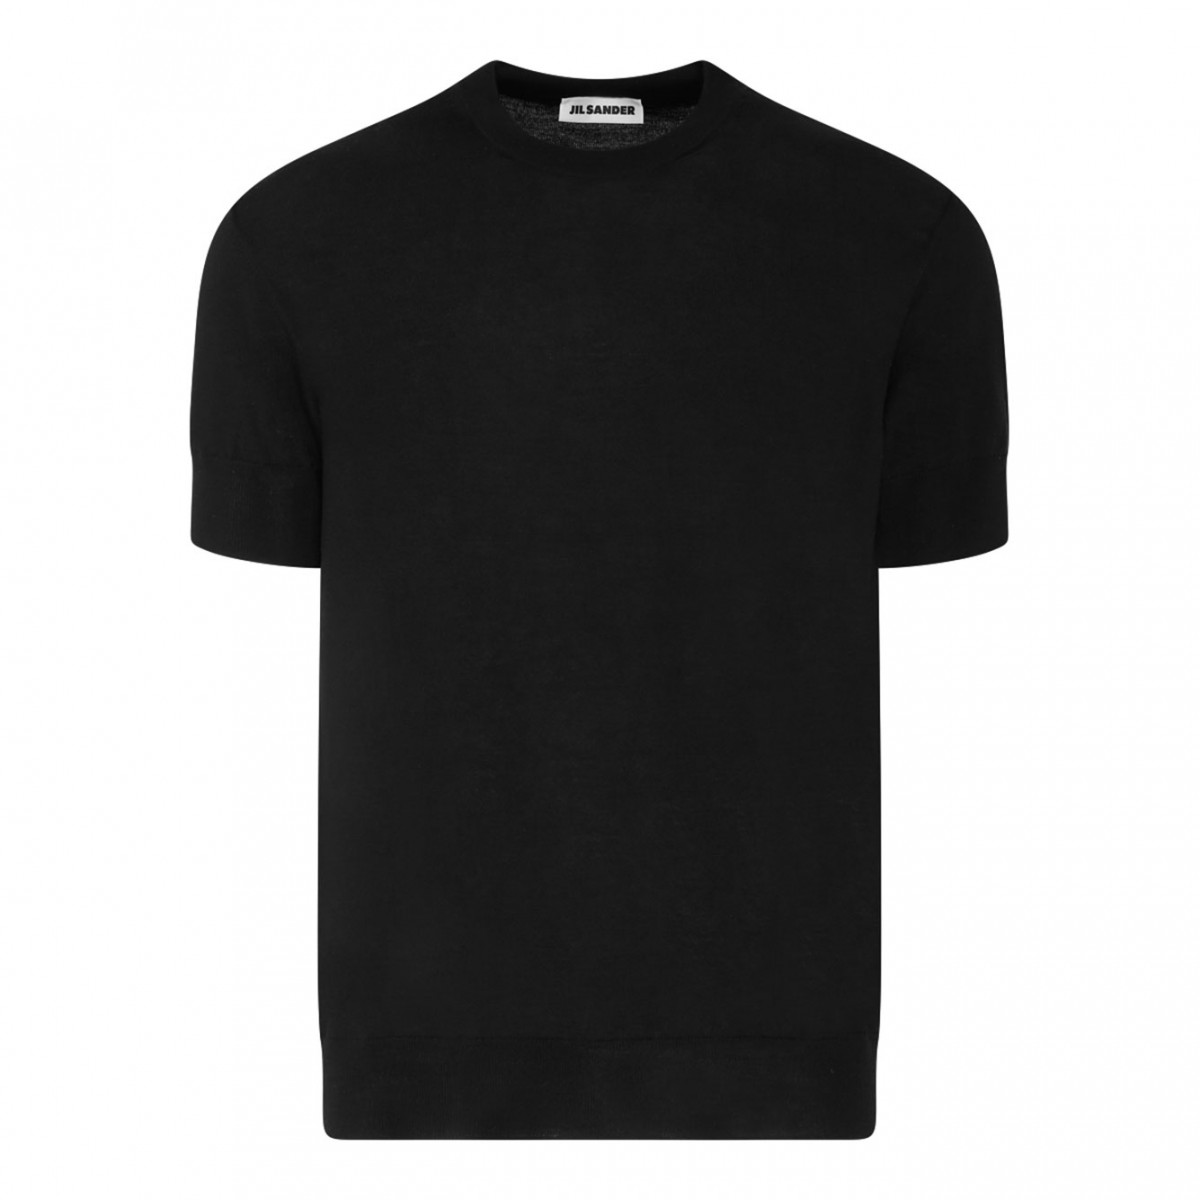 Black Virgin Wool T-Shirt